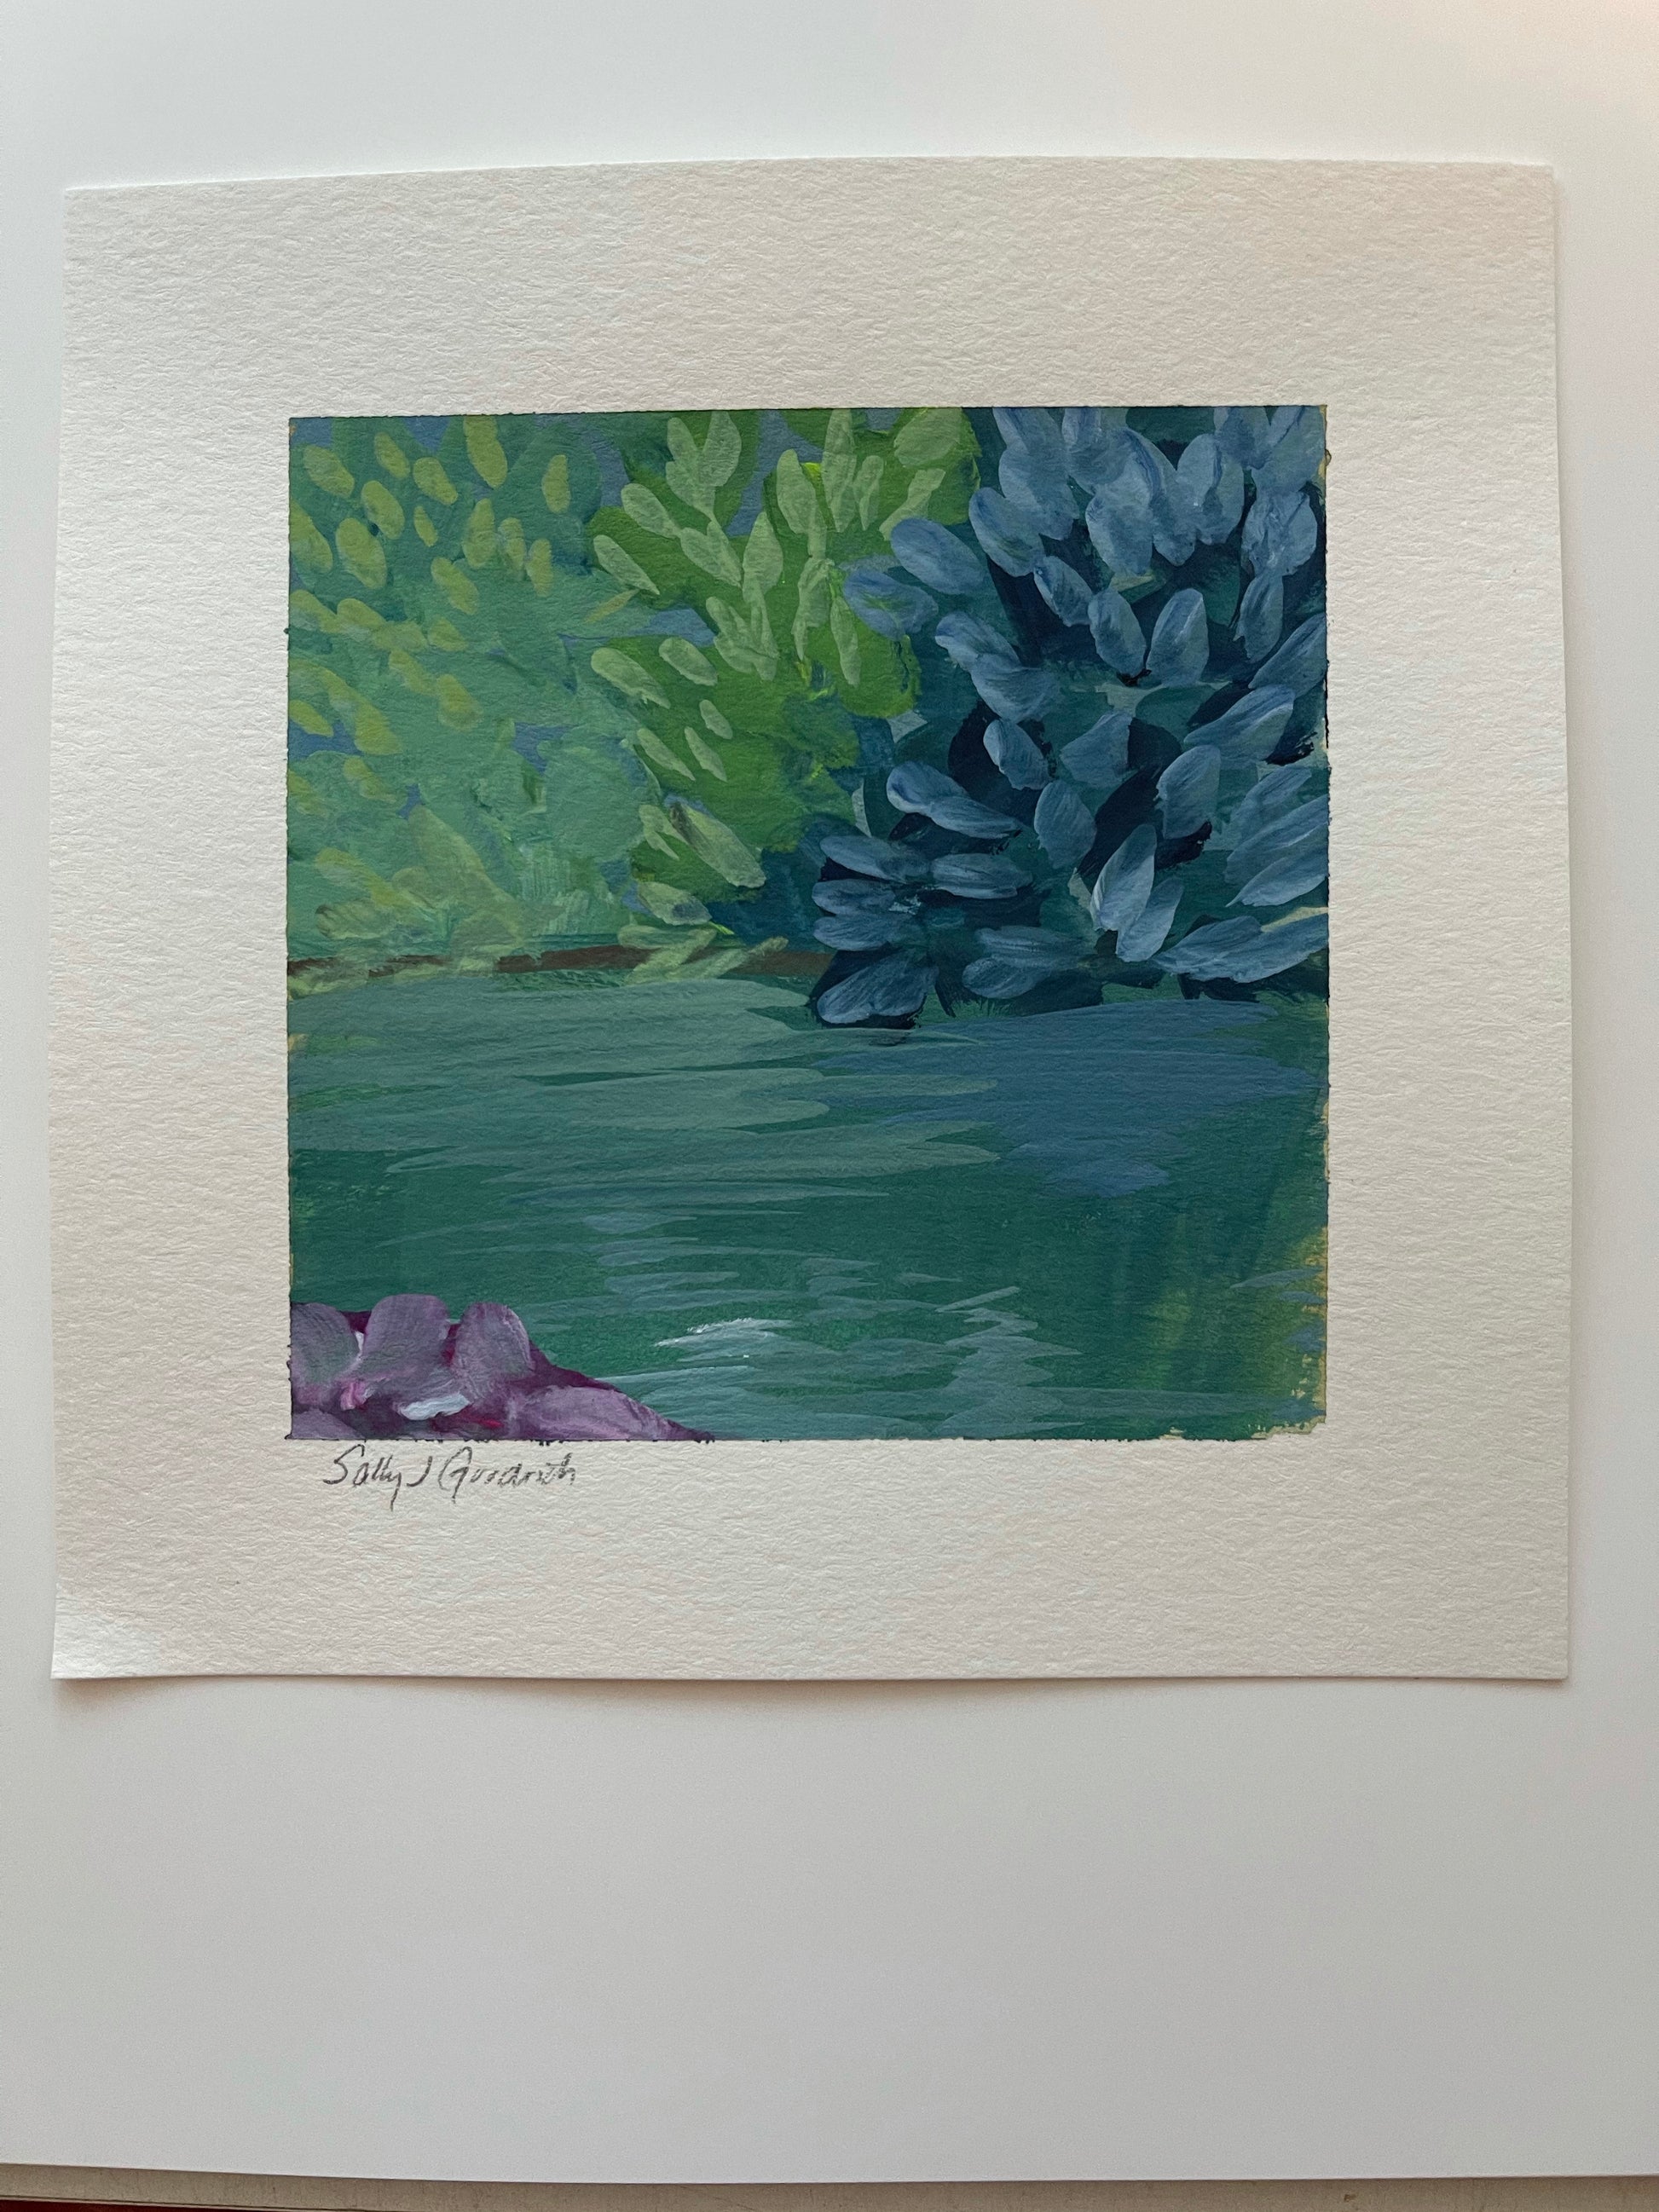 6x6-sally-j-goodrich-more-joy-lake-painting